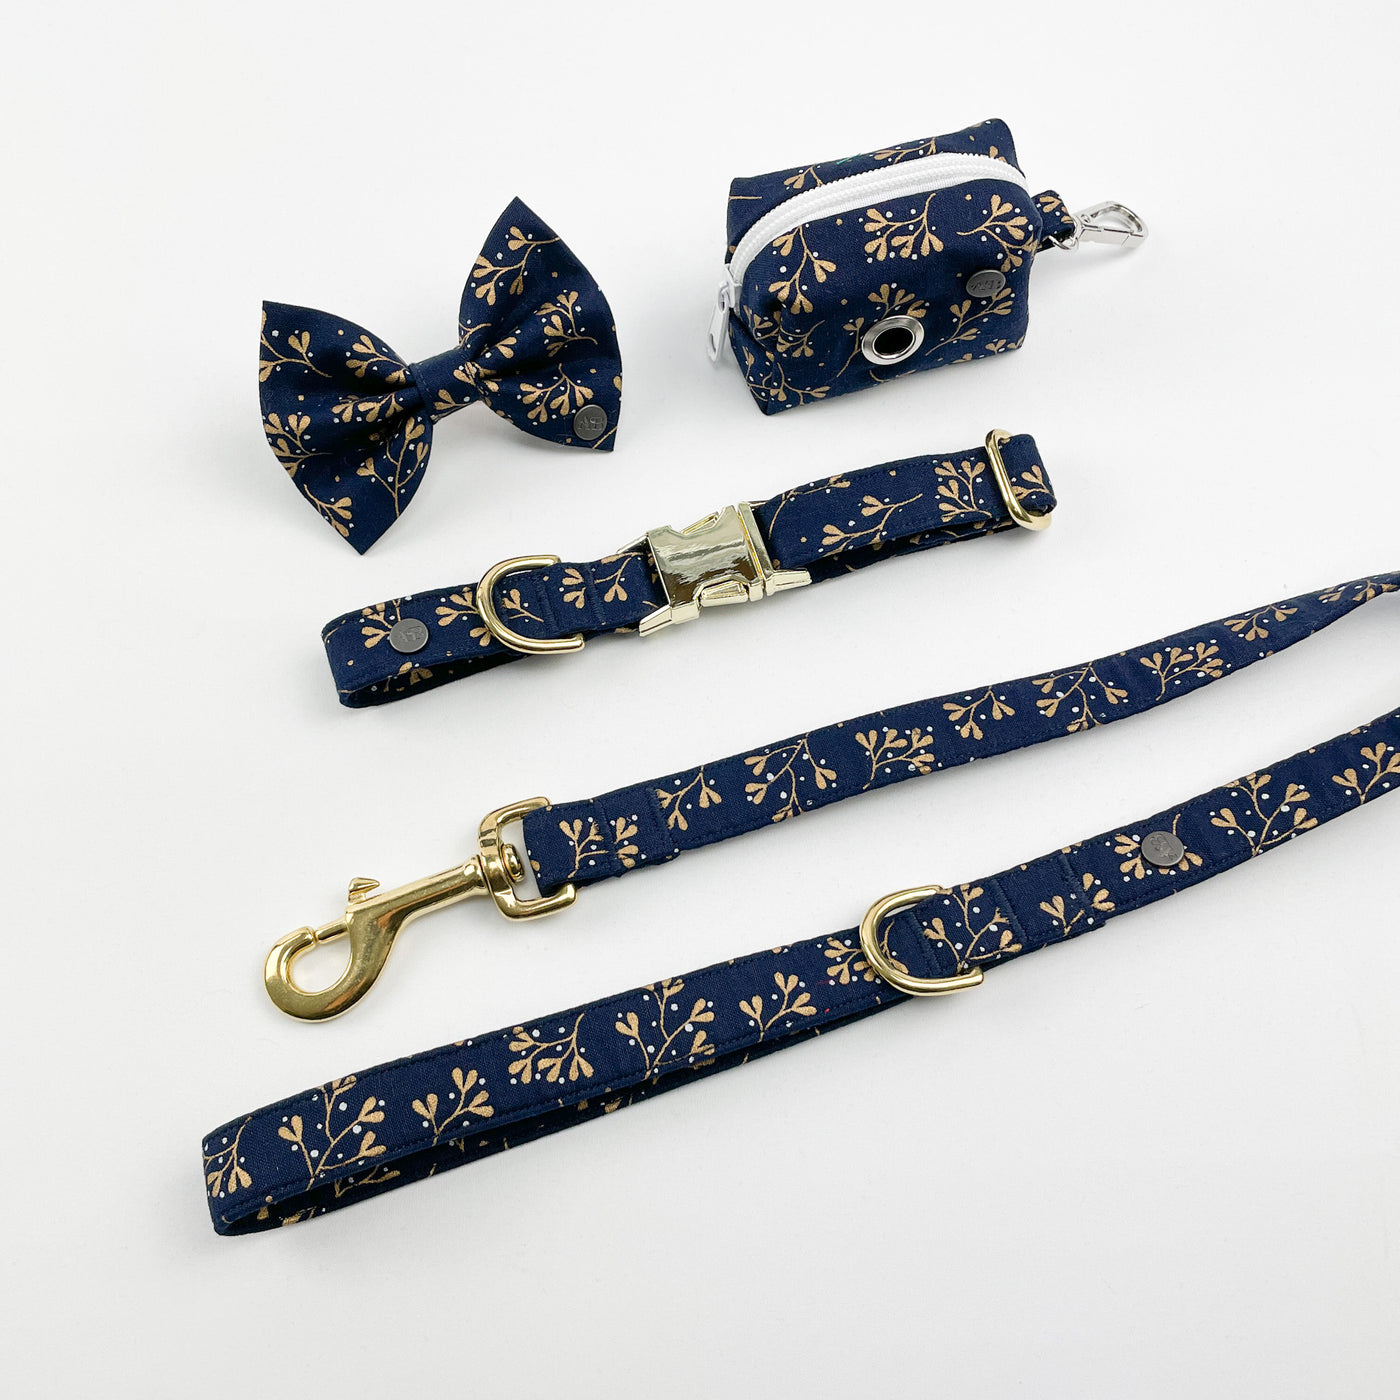 Navy mistletoe dog lead, collar, bow tie and poop bag holder